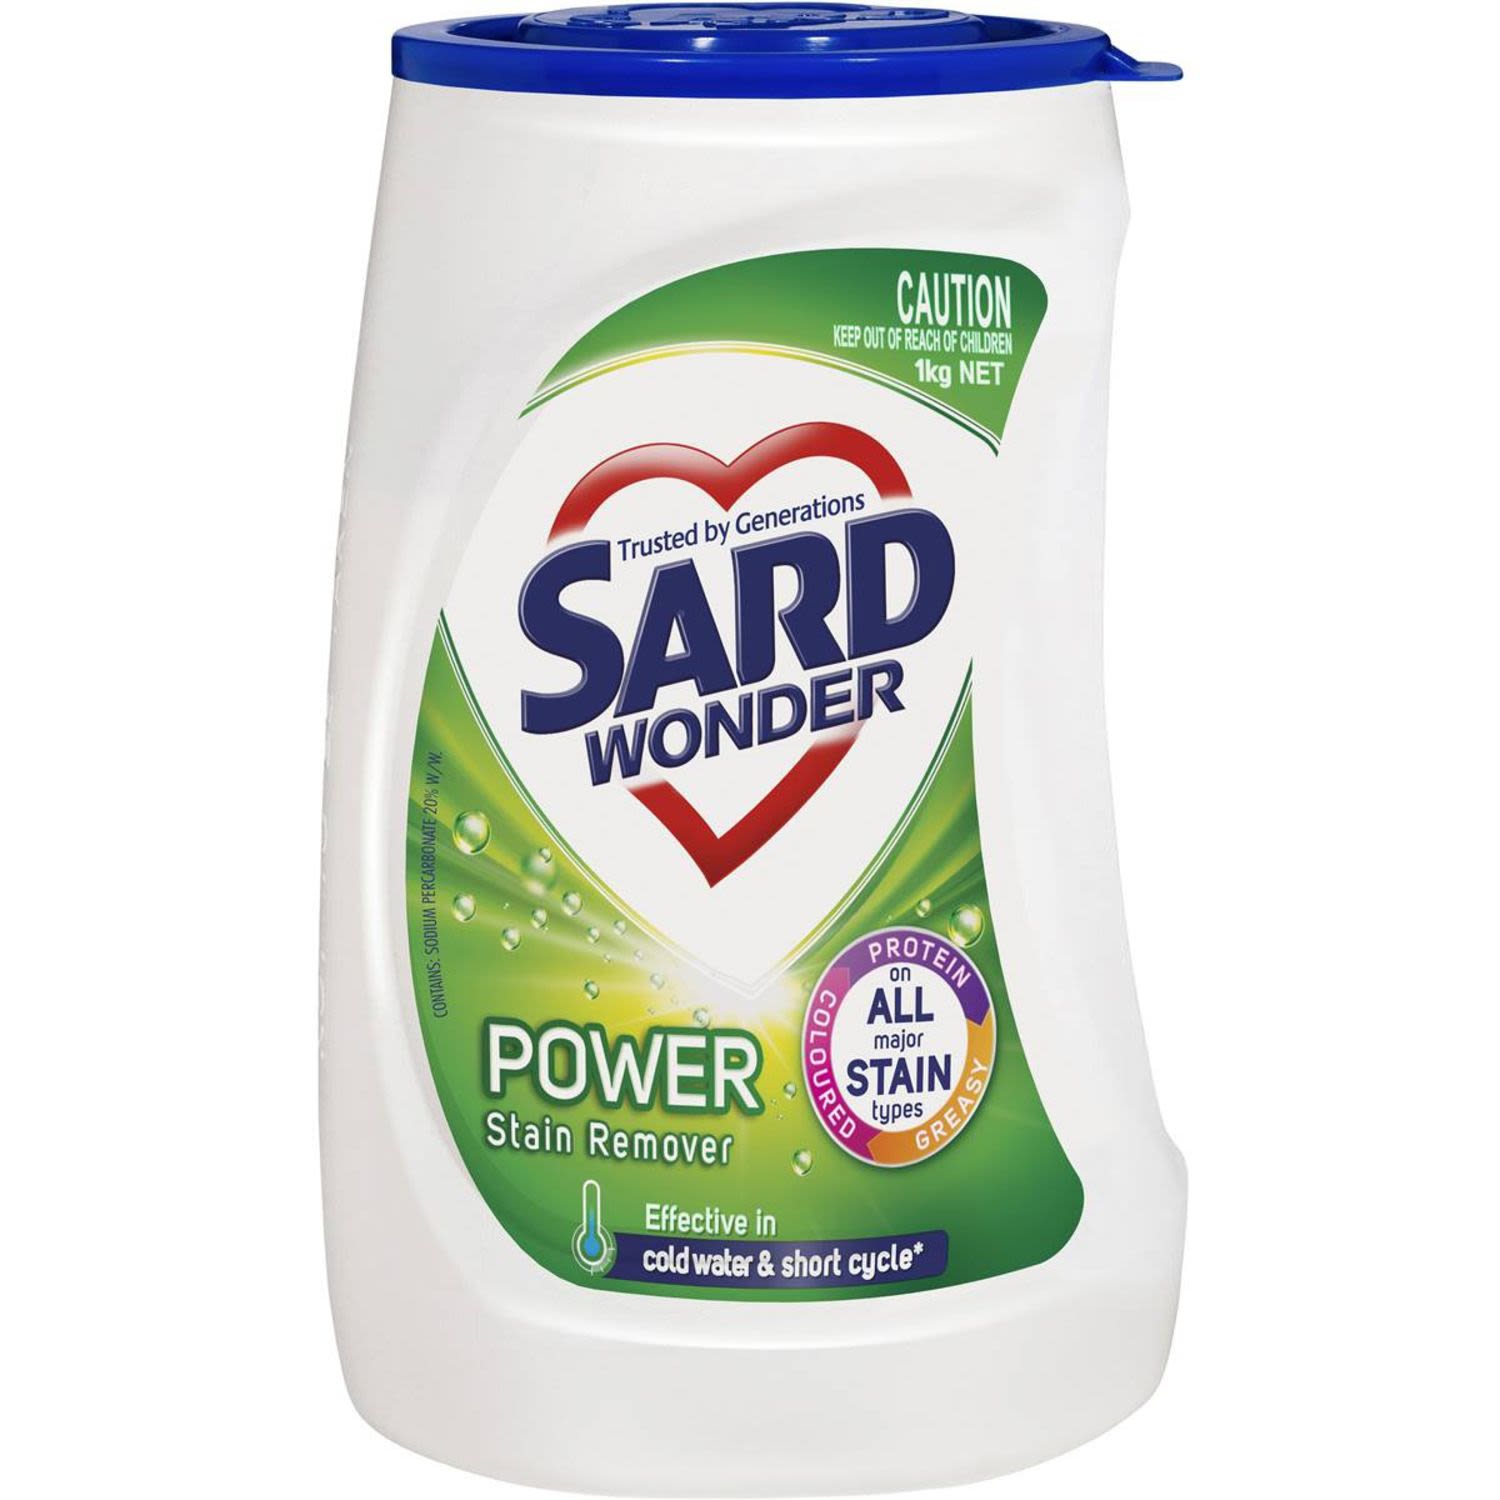 Sard Power Stain Remover Powder Soaker, 1 Kilogram